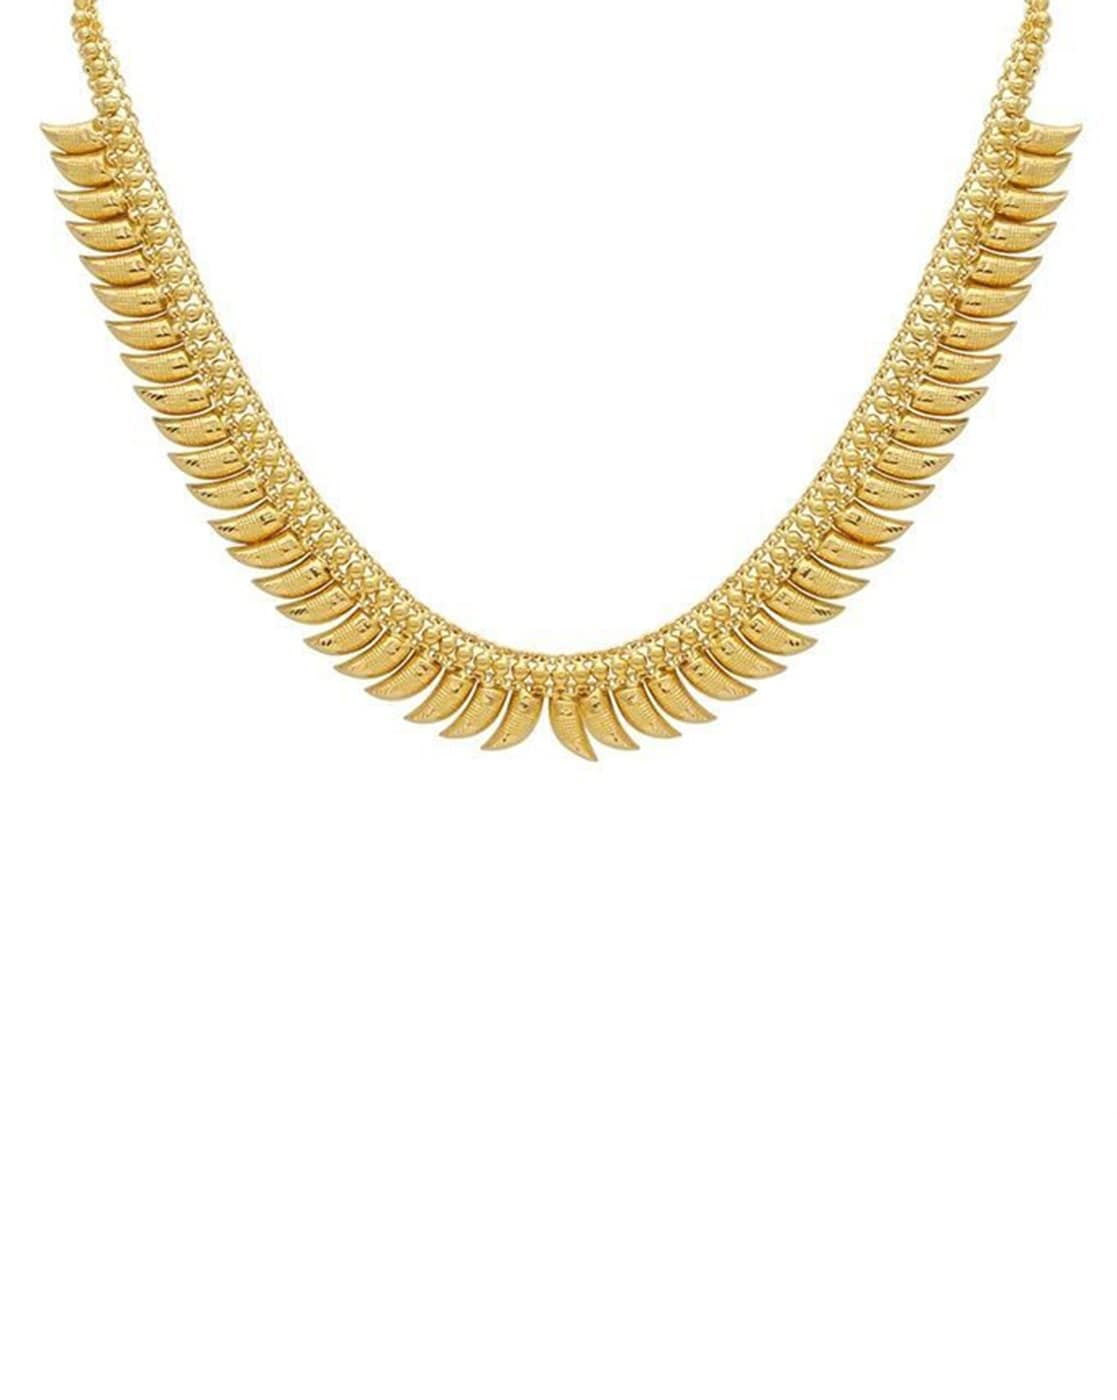 22k 91.6 Kerala Gold Necklace, 16.000 Gm